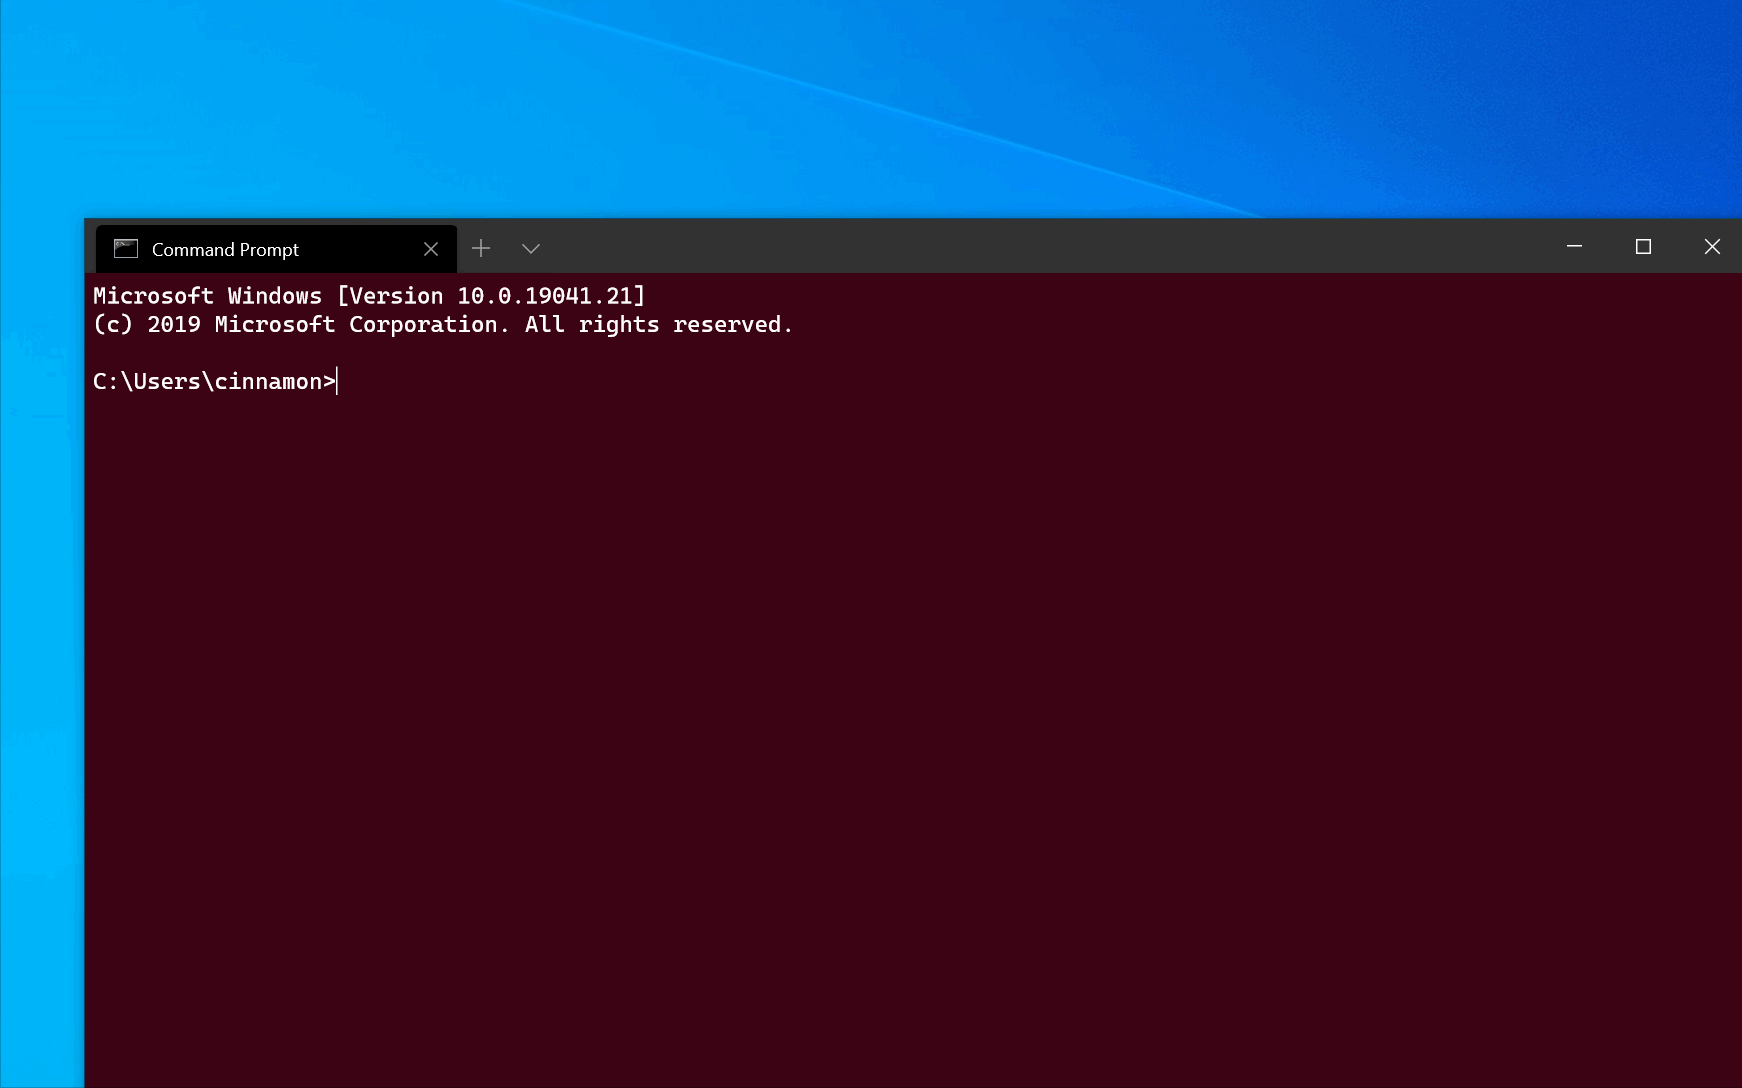 25 comandos básicos do CMD (Terminal do Windows)